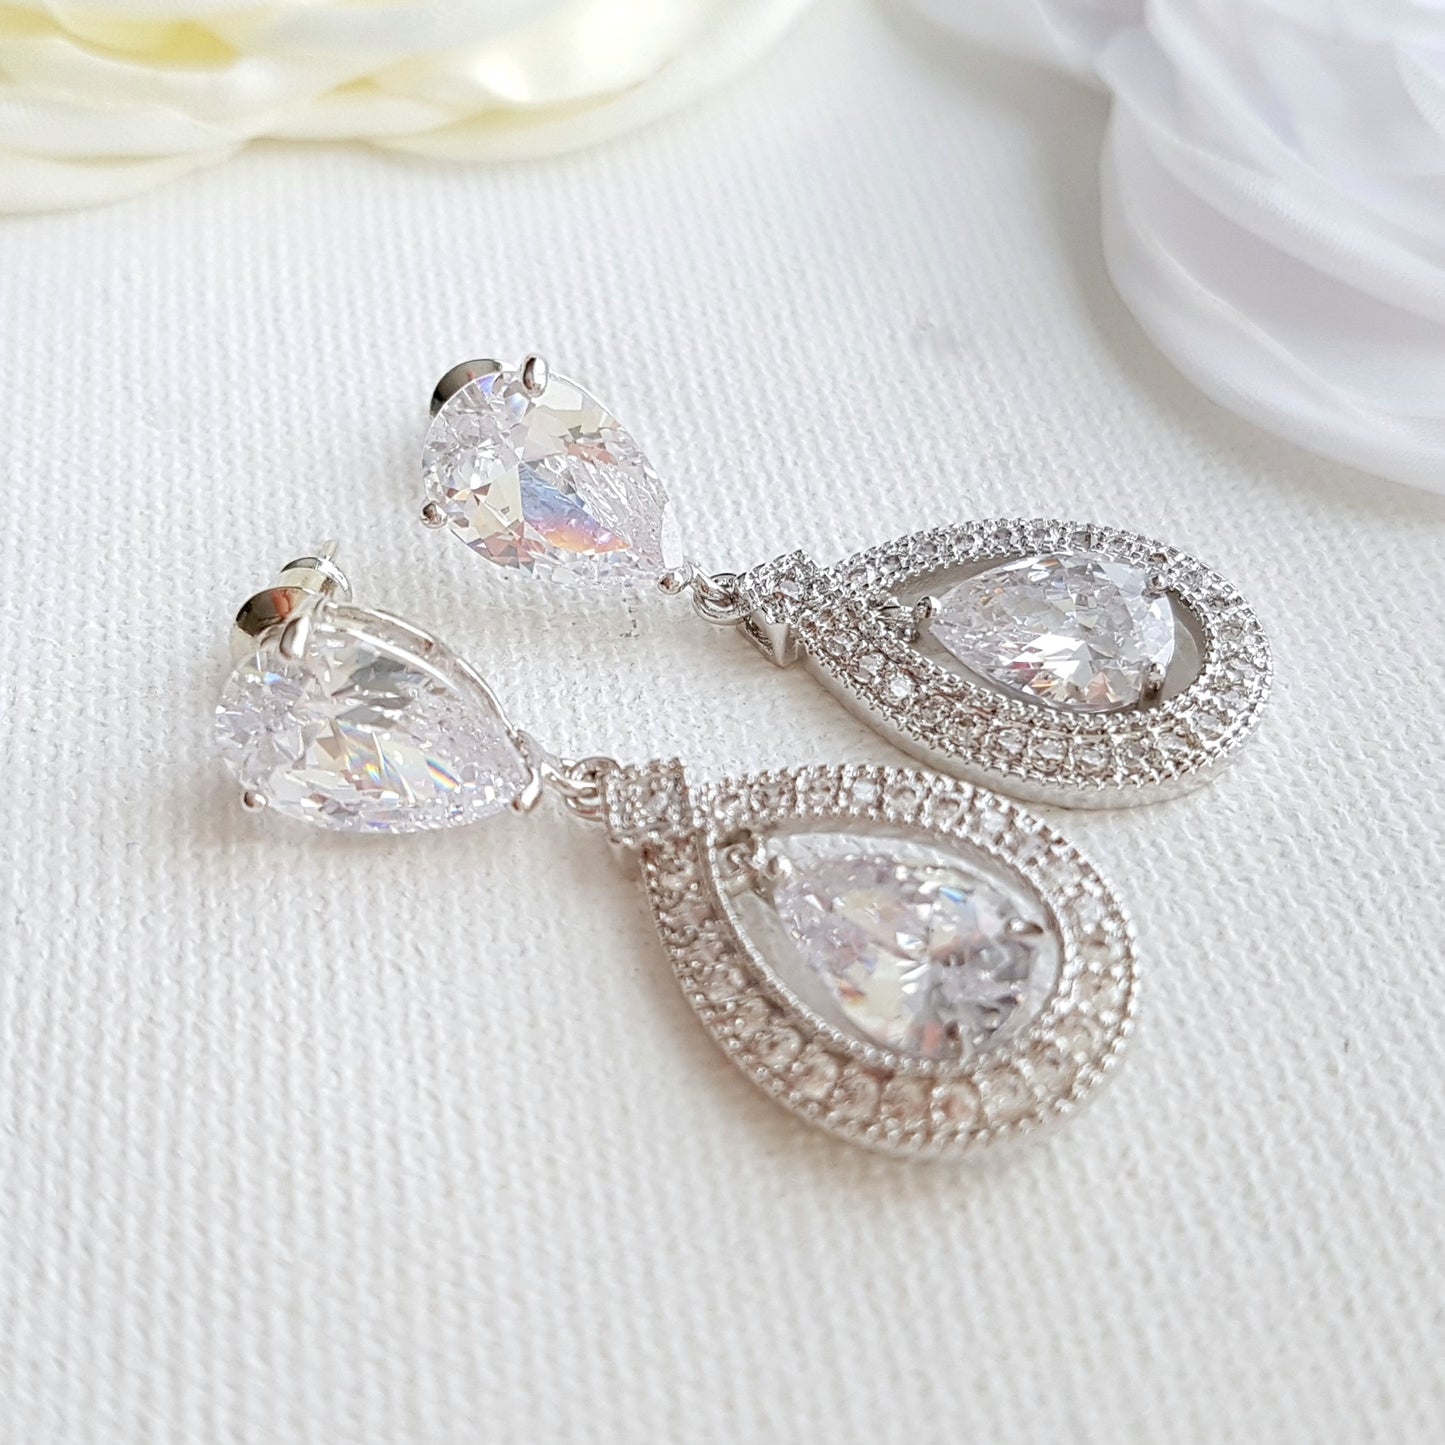 Rose Gold Crystal Drop Earrings- Sarah